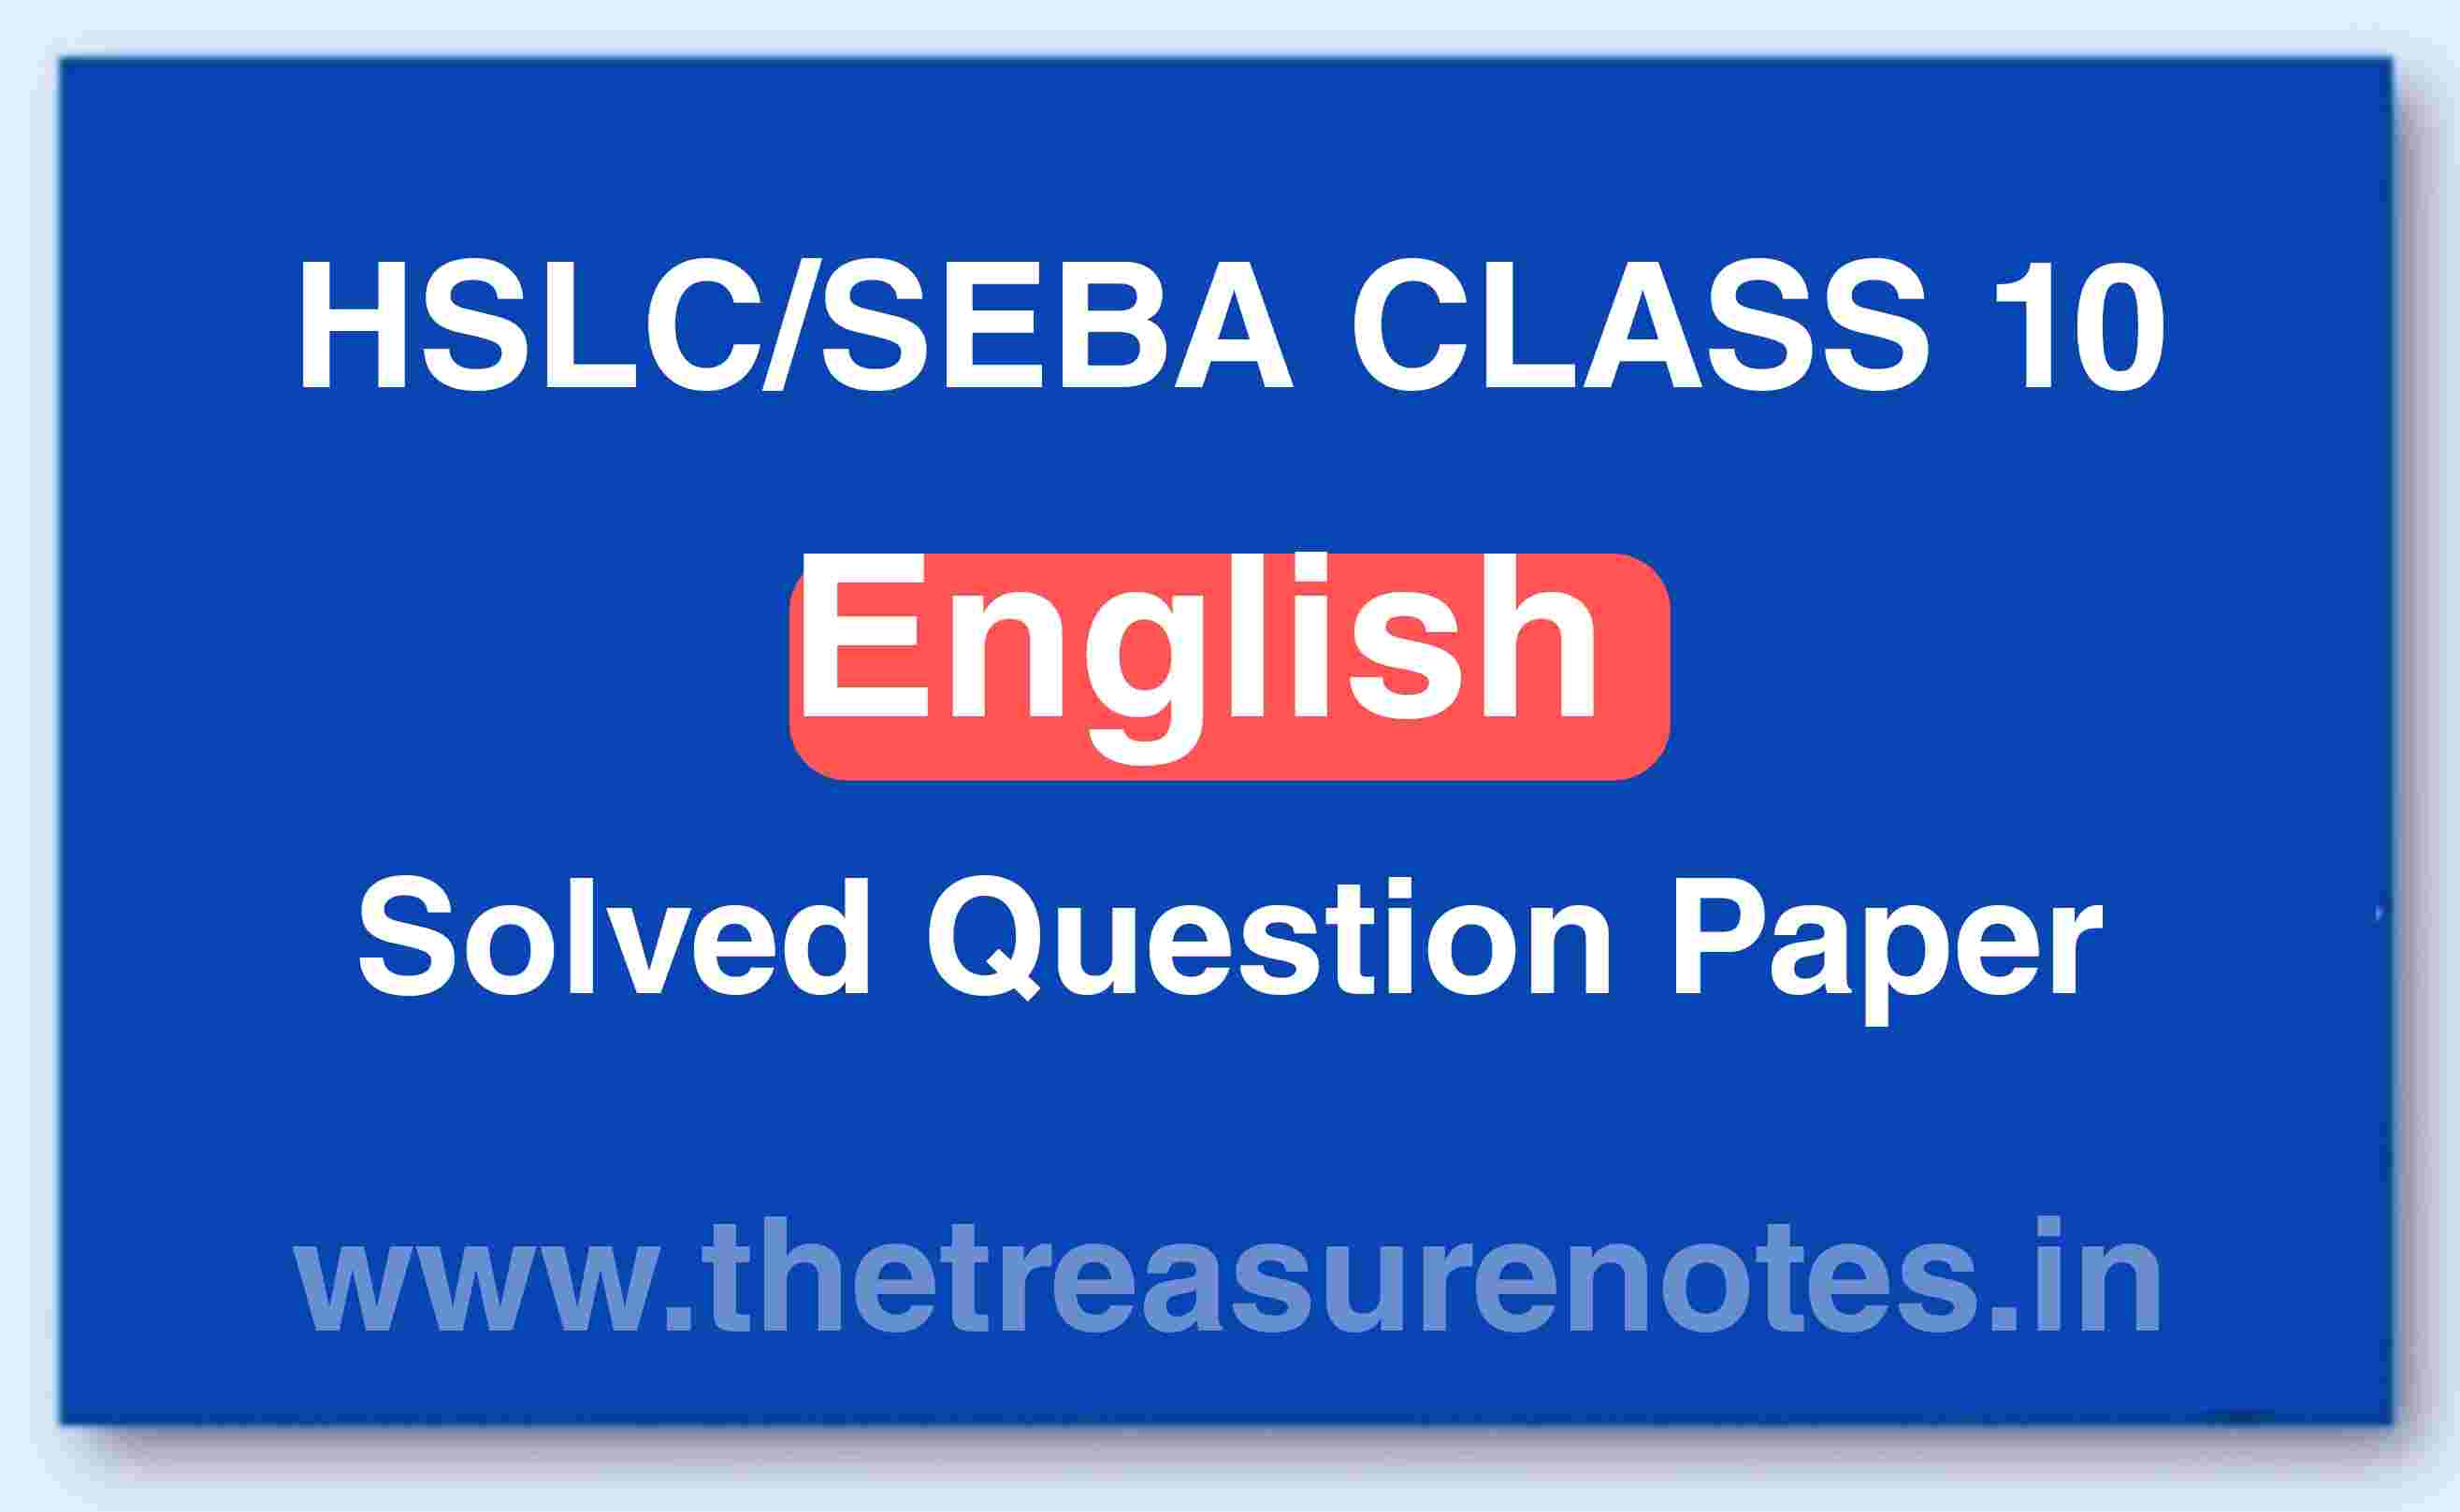 HSLC/SEBA Class 10 English Solved Question Paper 2022